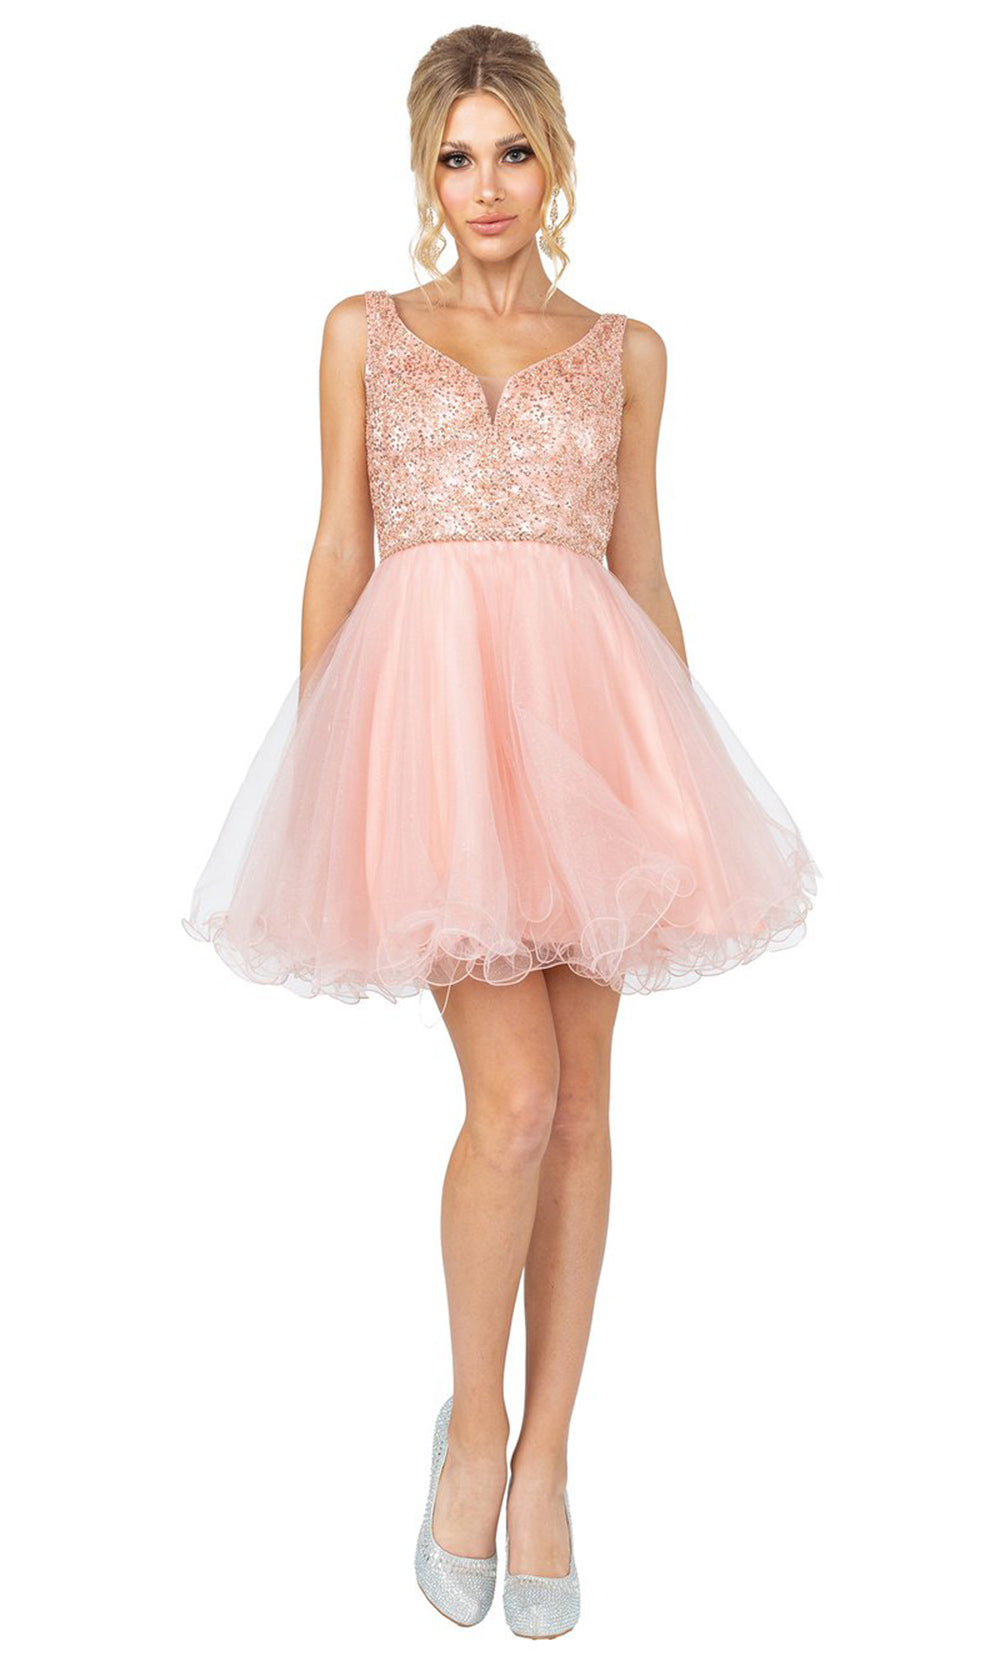 Dancing Queen - 3243 Sleeveless Sweetheart Glitter Tulle A-Line Dress In Pinkgrade 8 grad dresses, graduation dresses